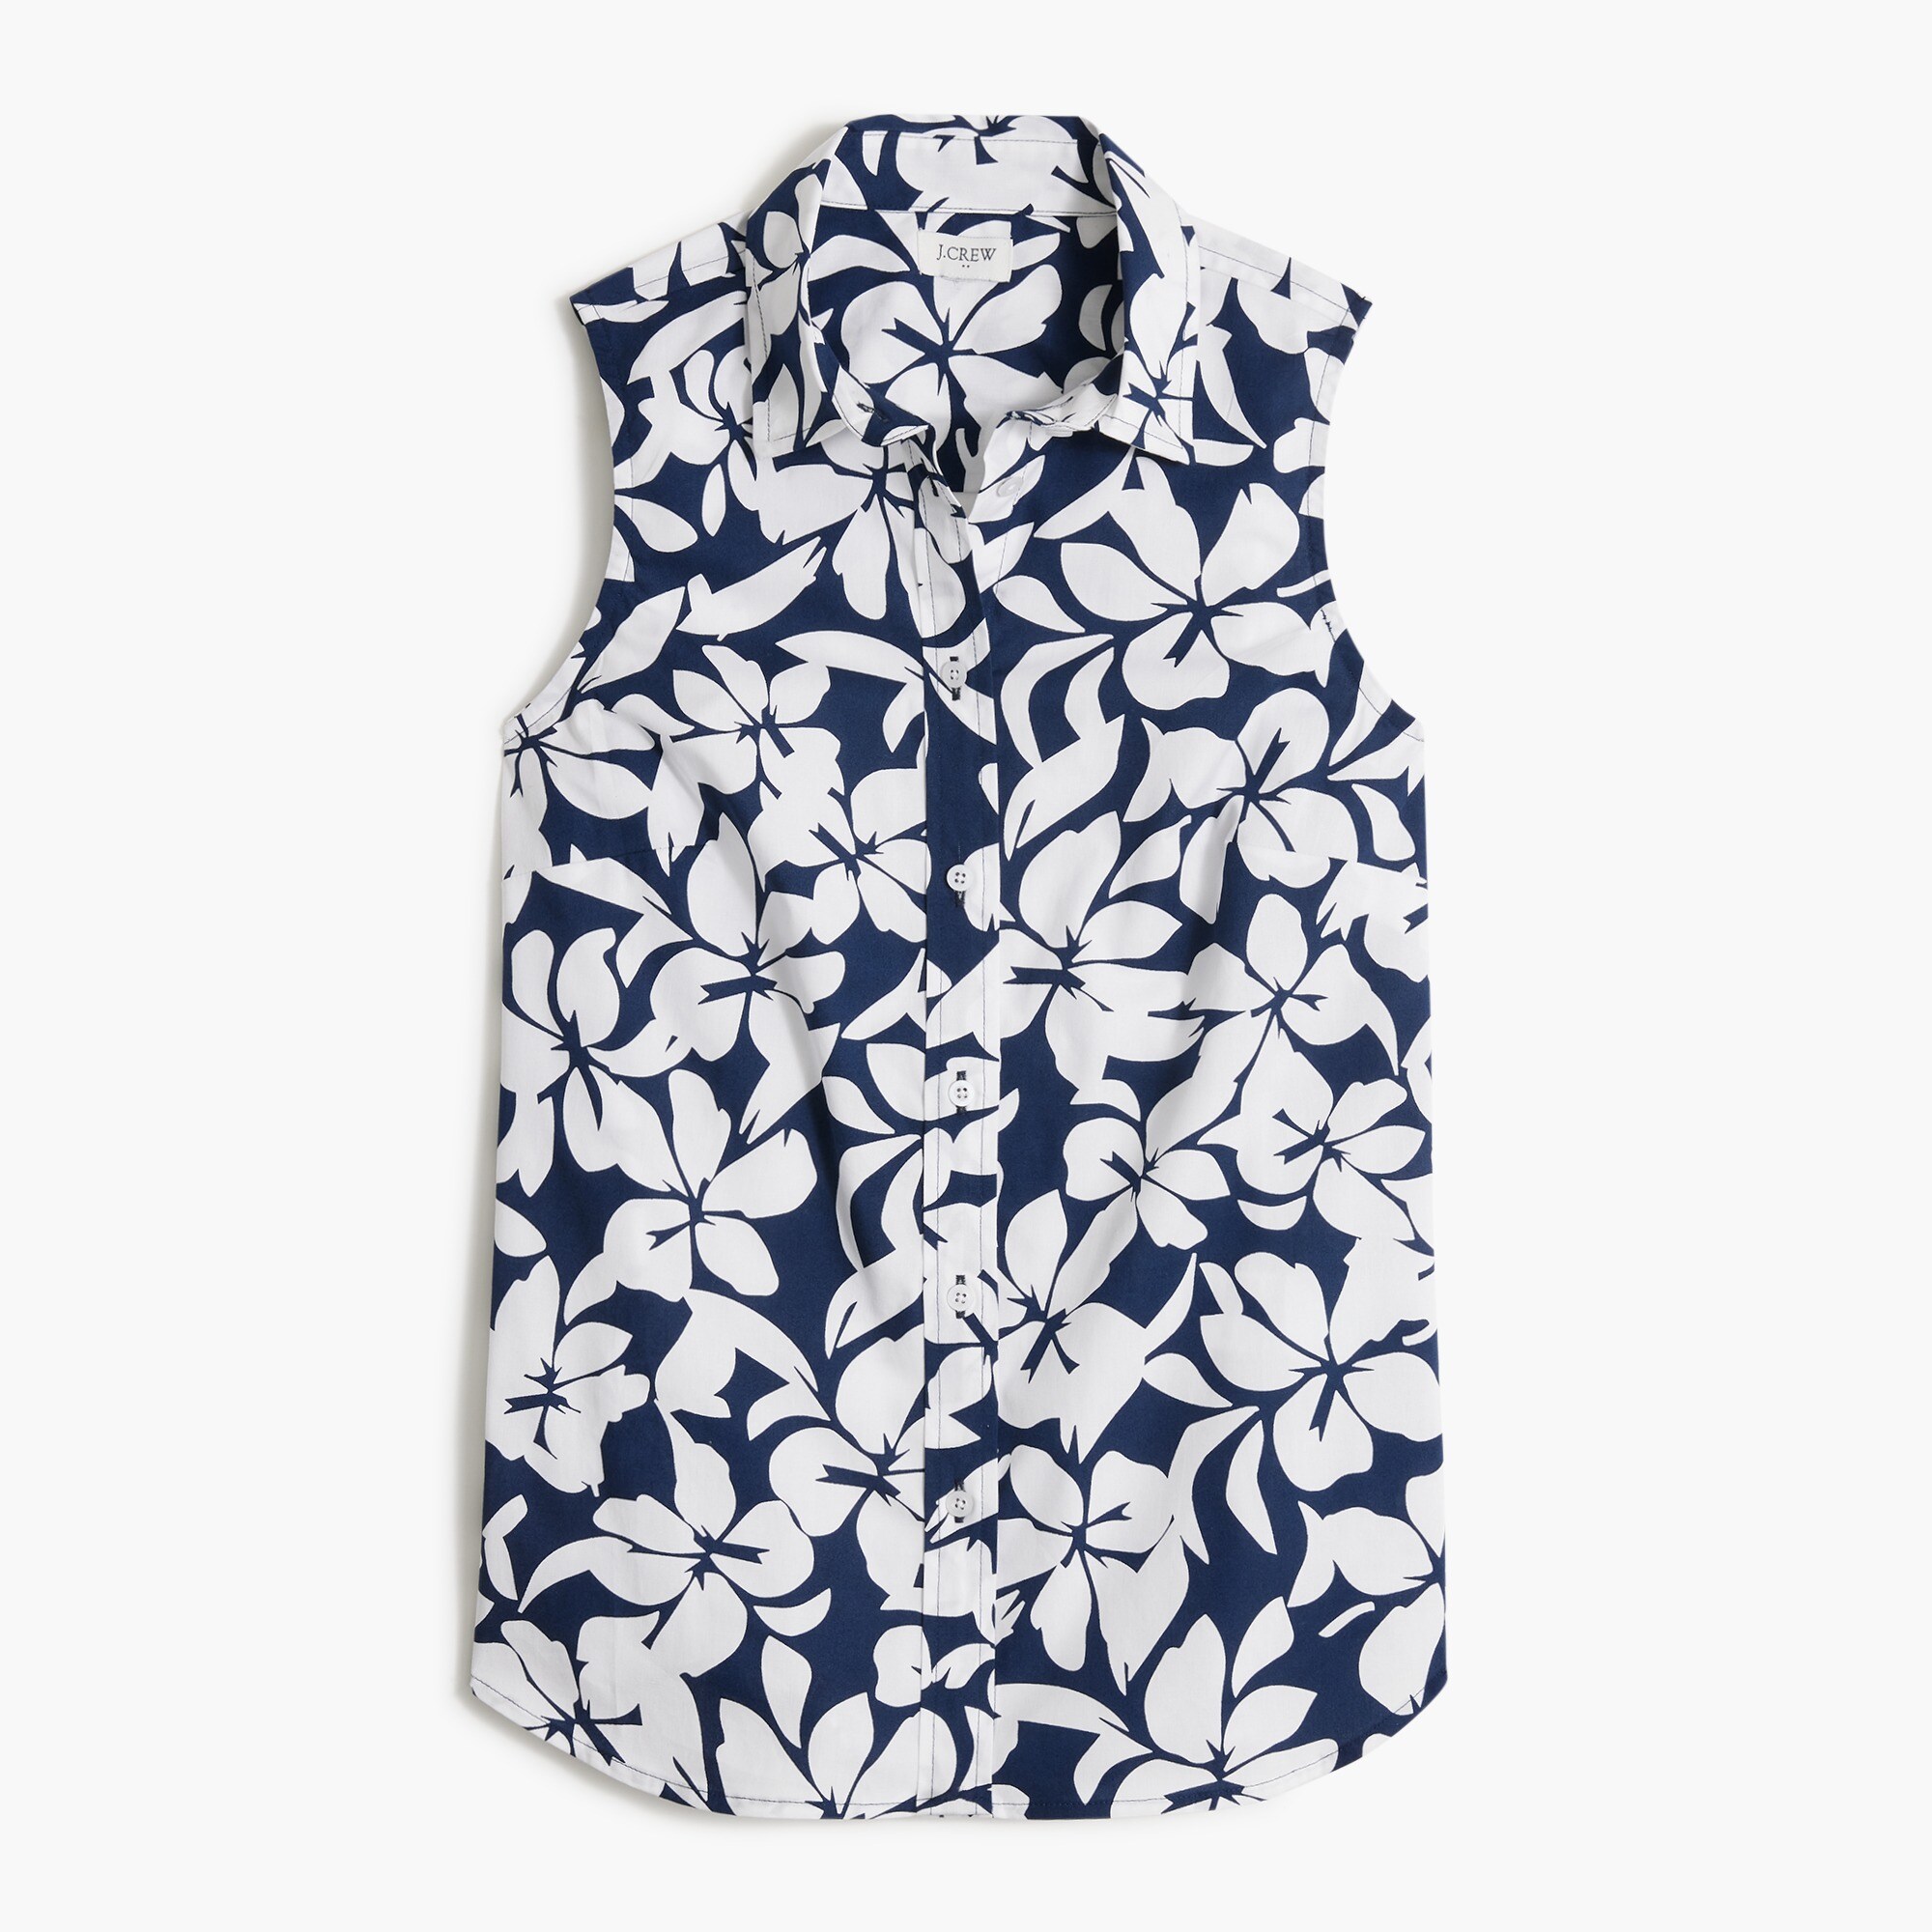  Petite sleeveless cotton poplin shirt in signature fit